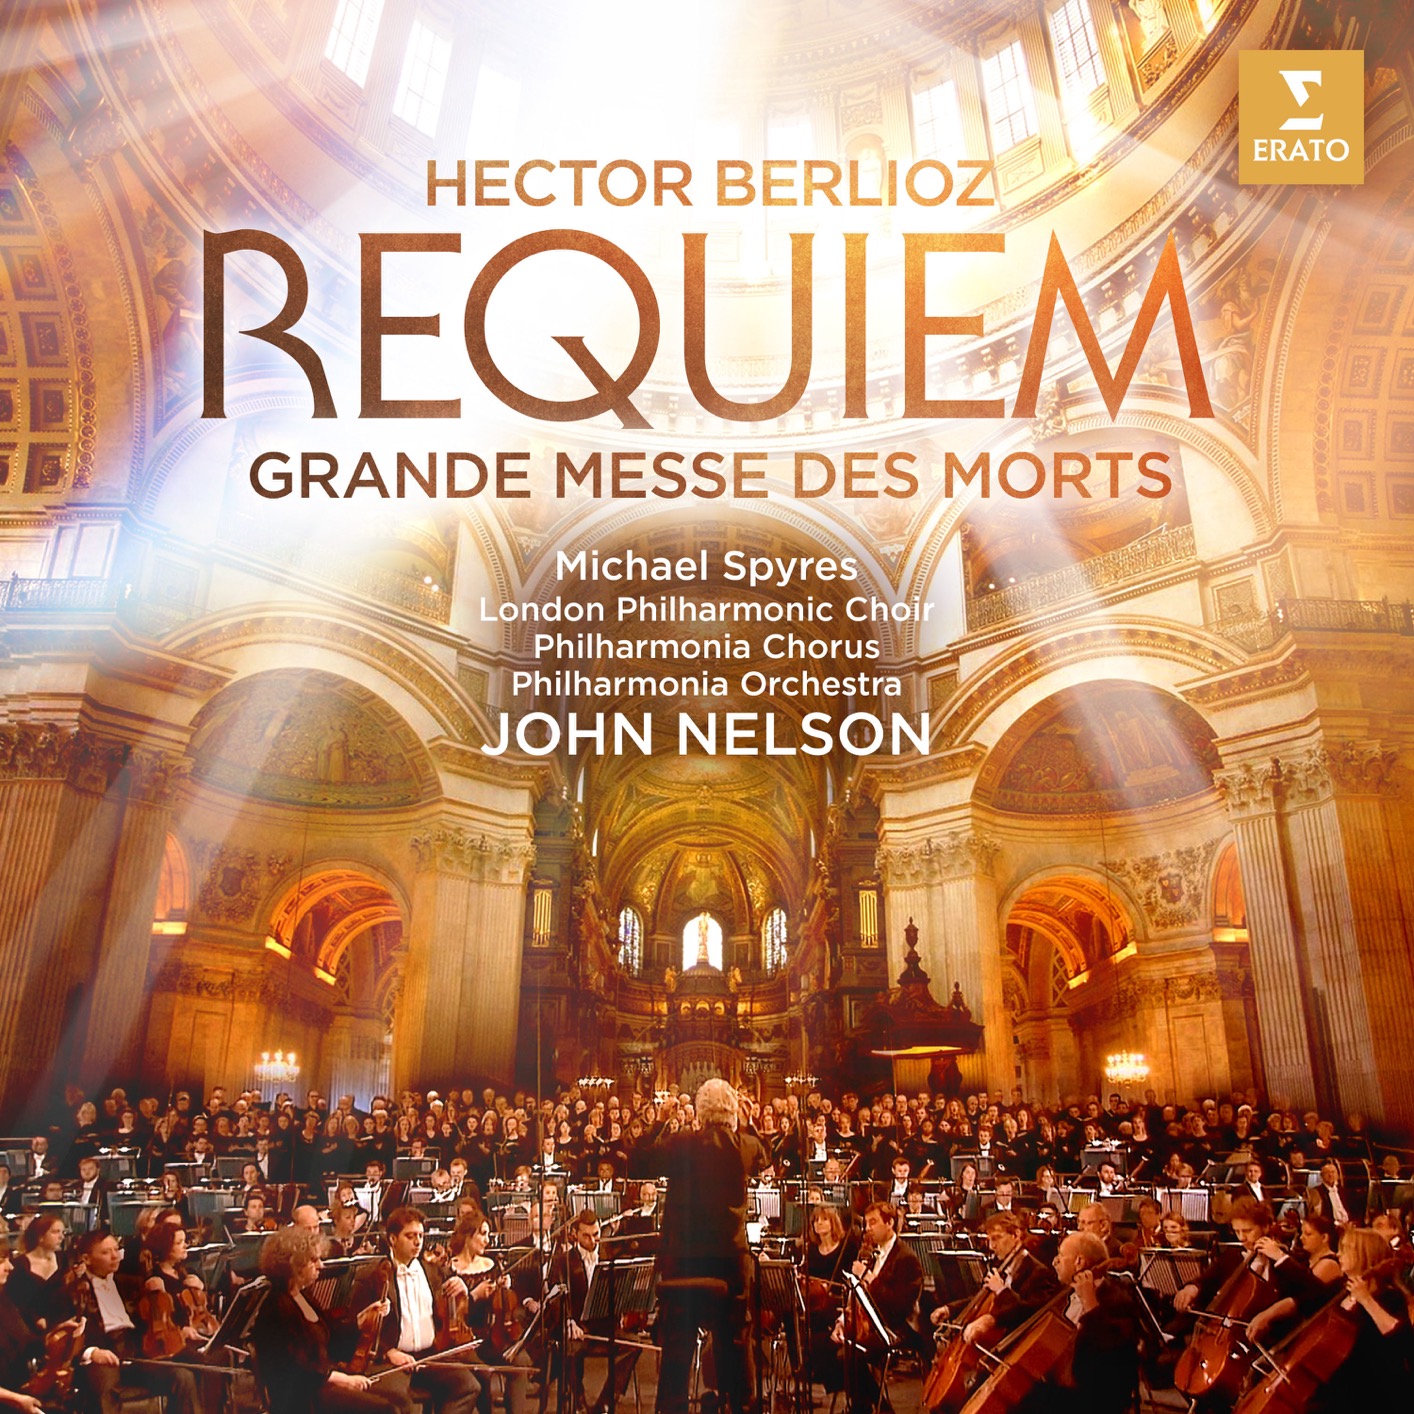 John Nelson - Berlioz: Requiem (Grande Messe des morts) (2019) [FLAC 24bit/96kHz]